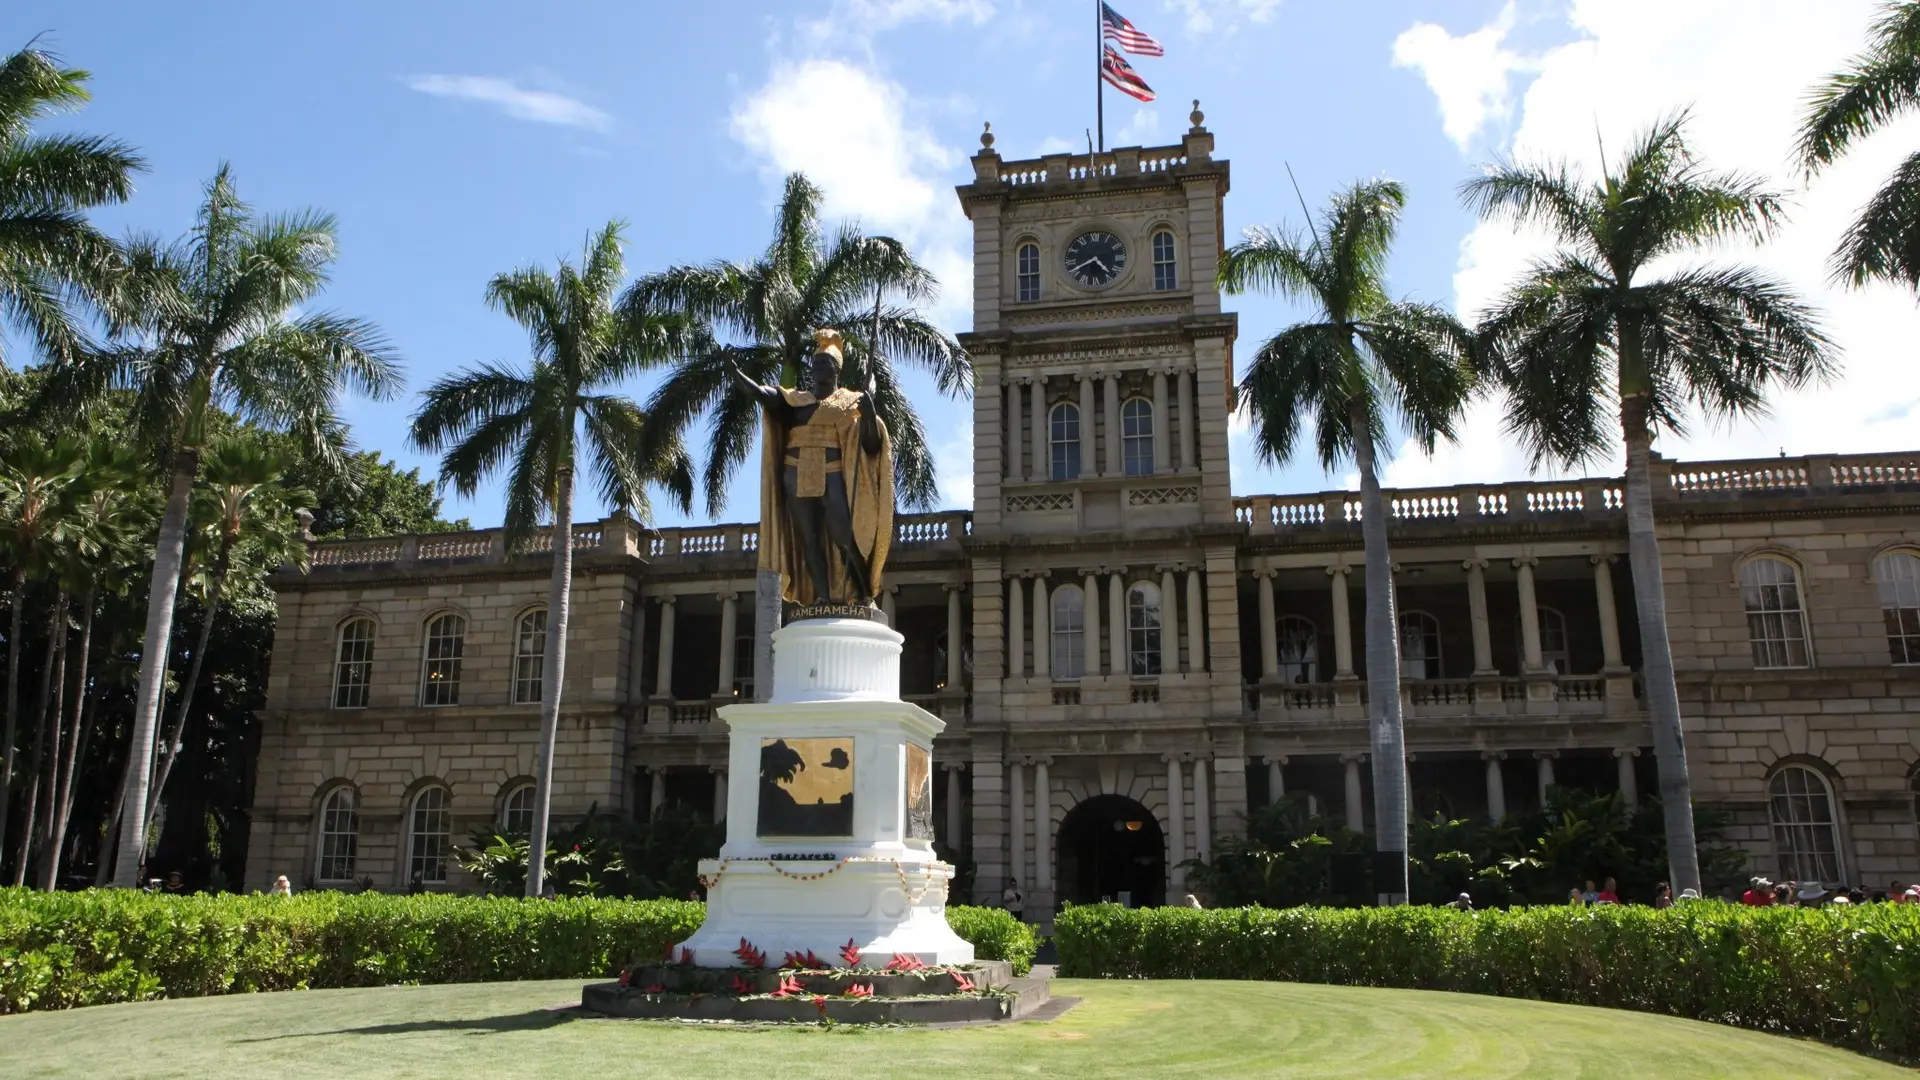 Destinations Articles - Hawaii Travel Guide